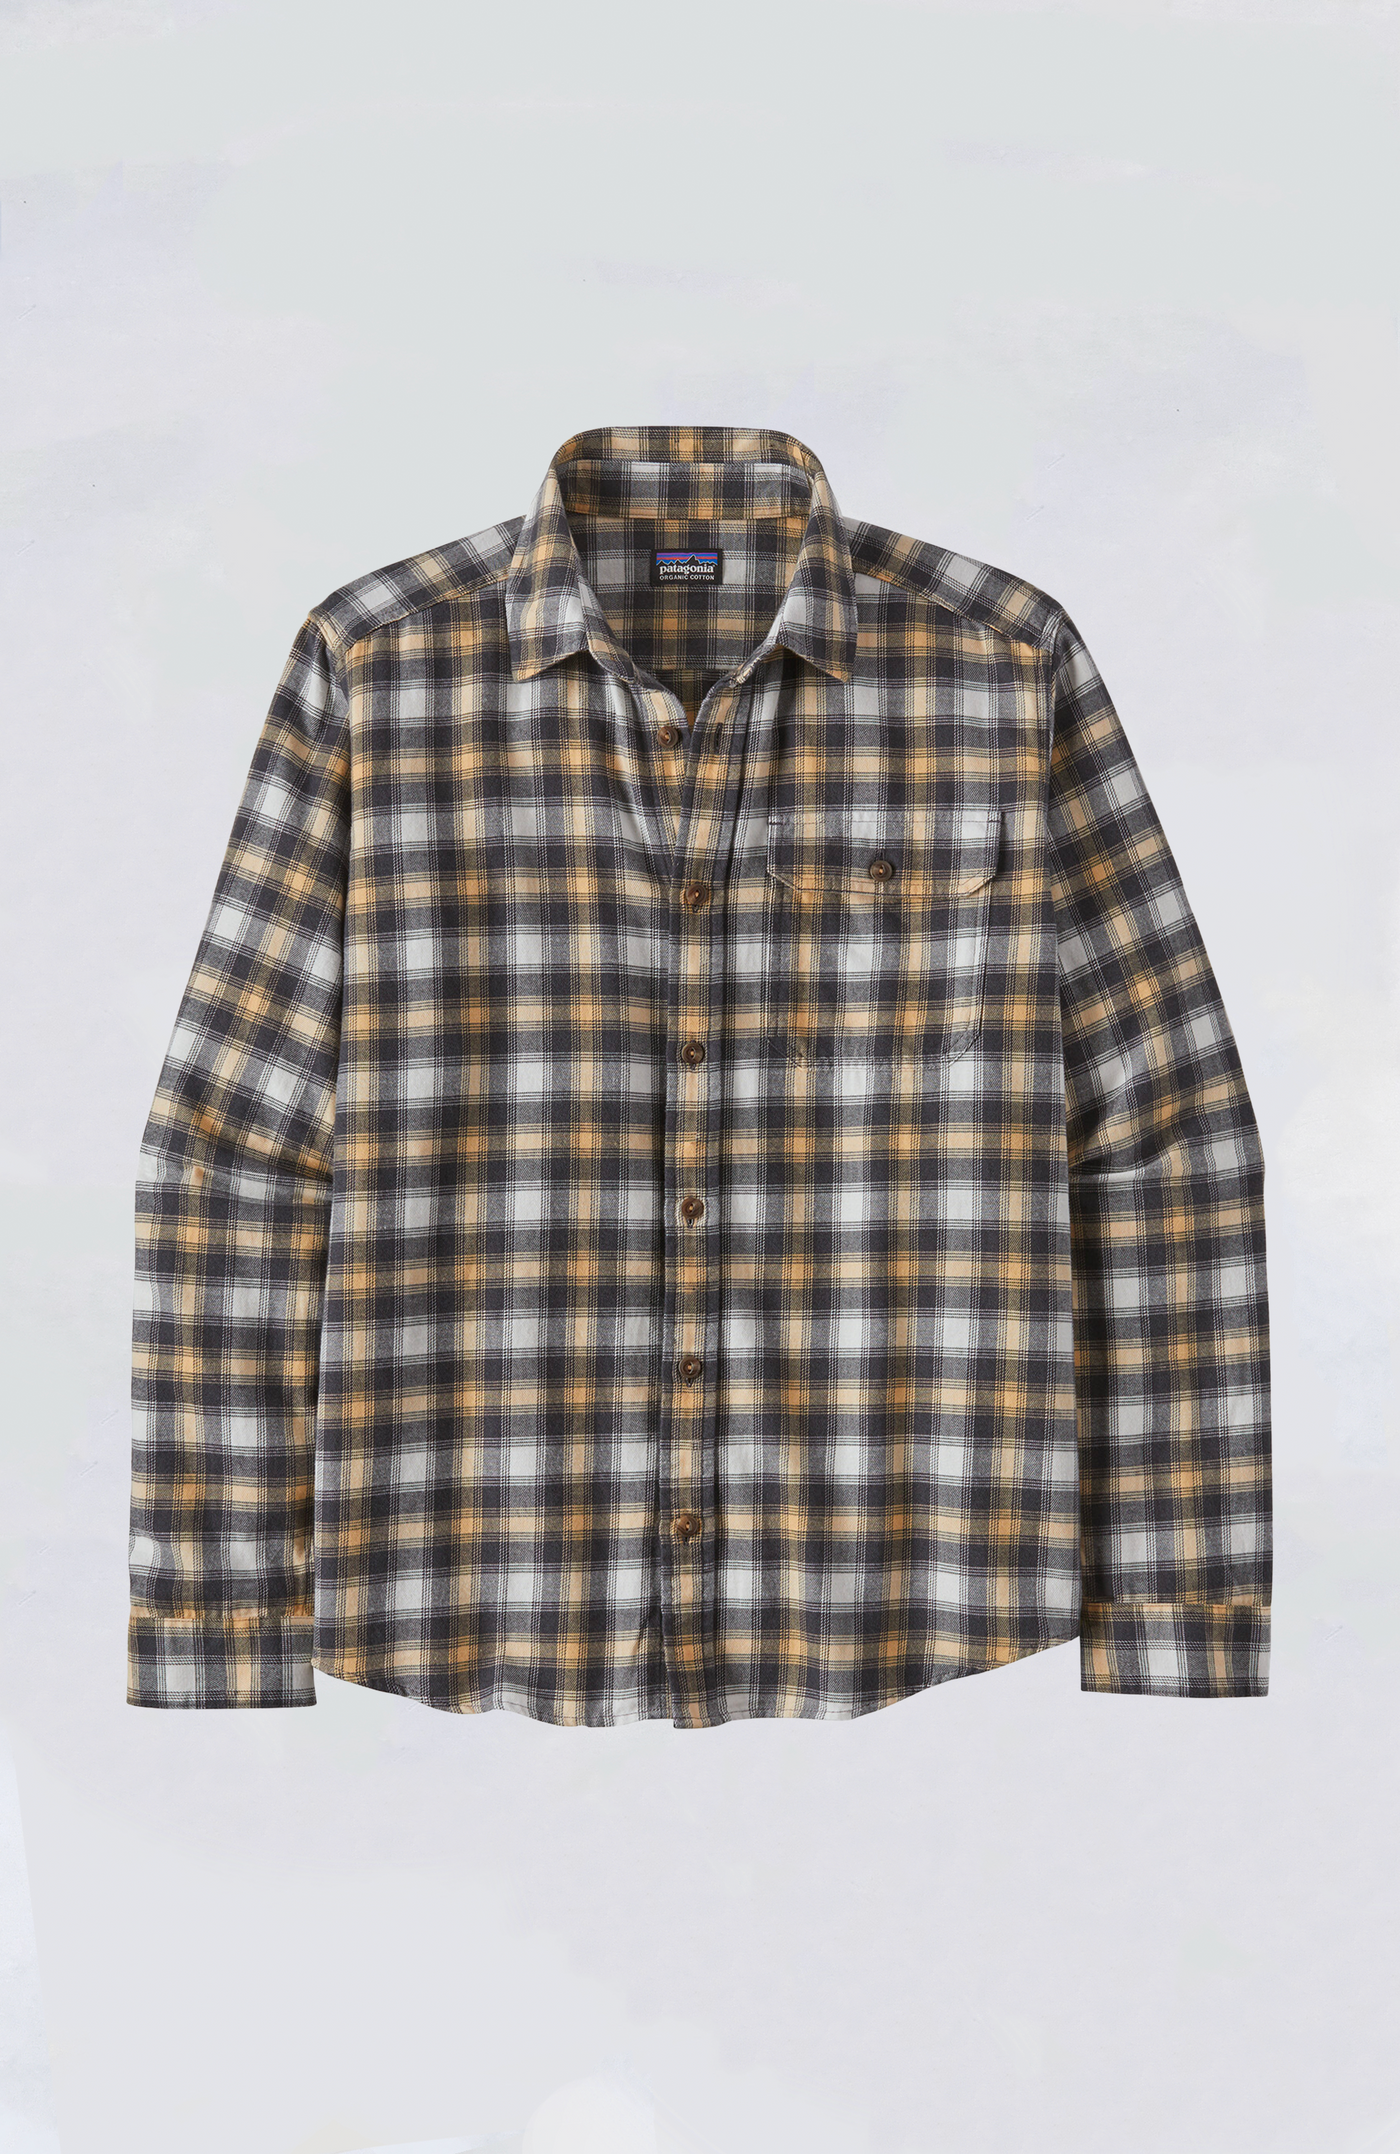 Patagonia Shirt - M's L/S LW Fjord Flannel Shirt